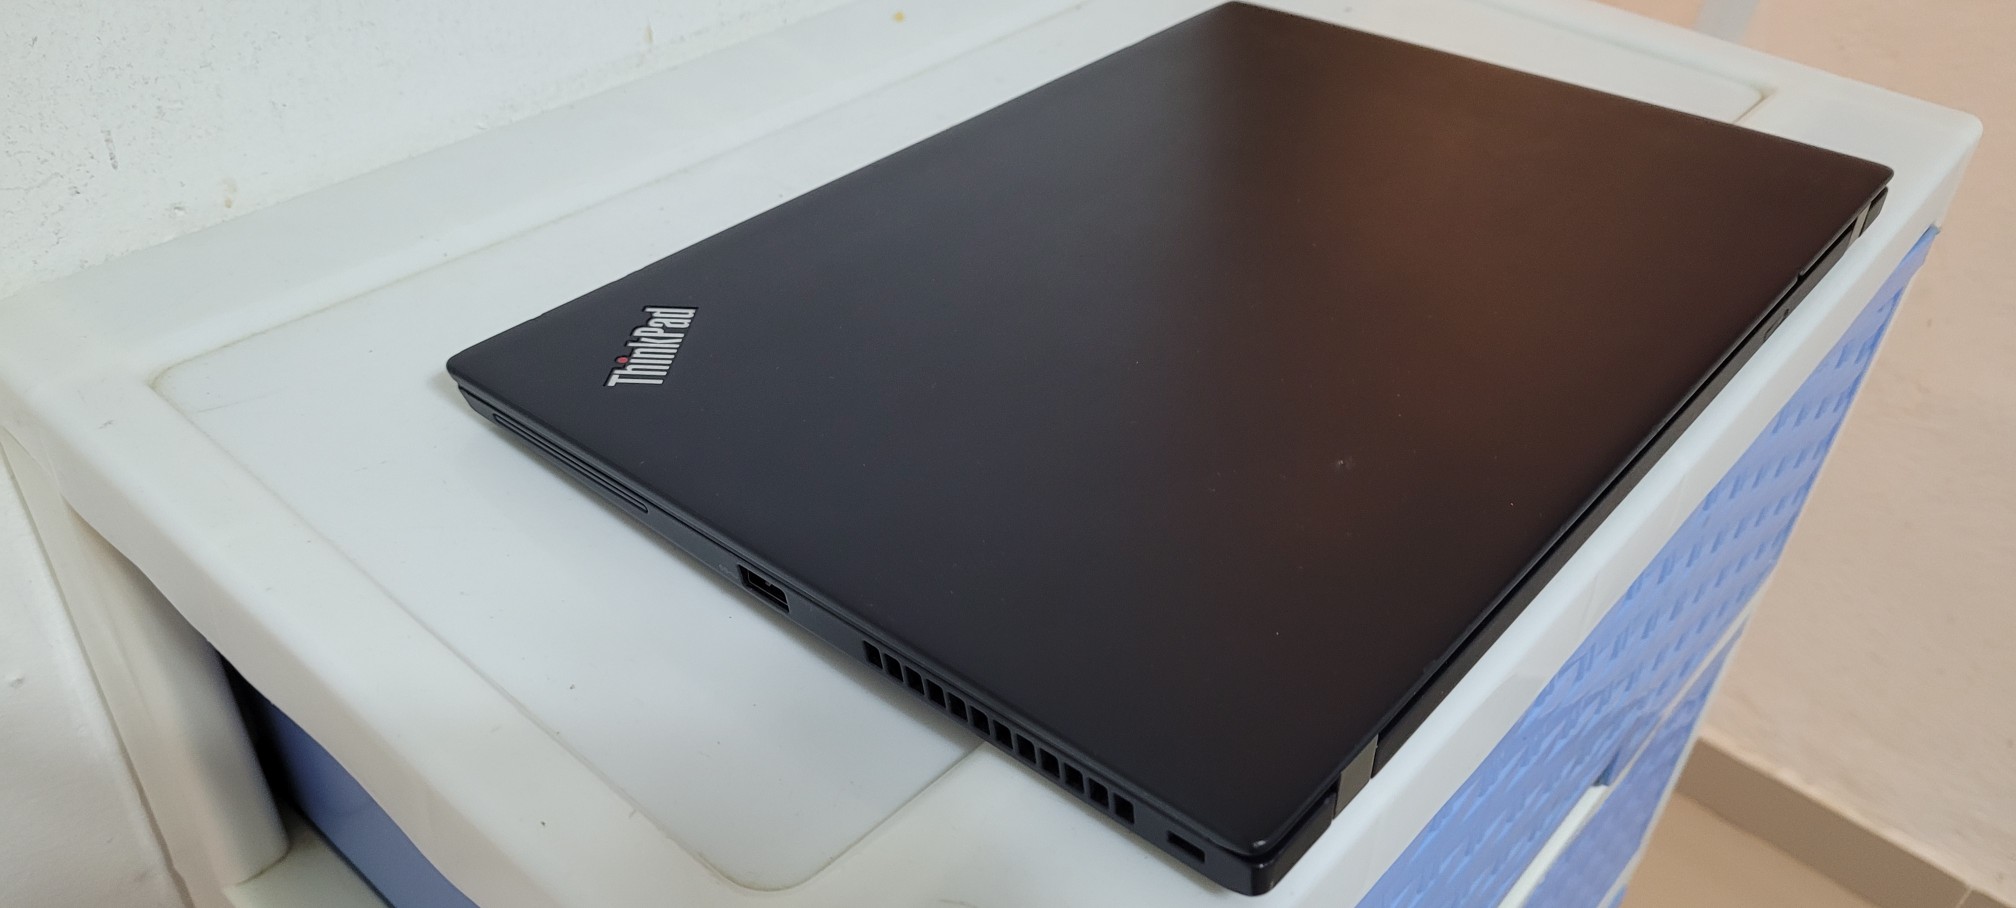 computadoras y laptops - Lenovo T480 14 Pulg Core i5 8va Gen Ram 8gb ddr4 Disco 256gb SSD Full HD  2